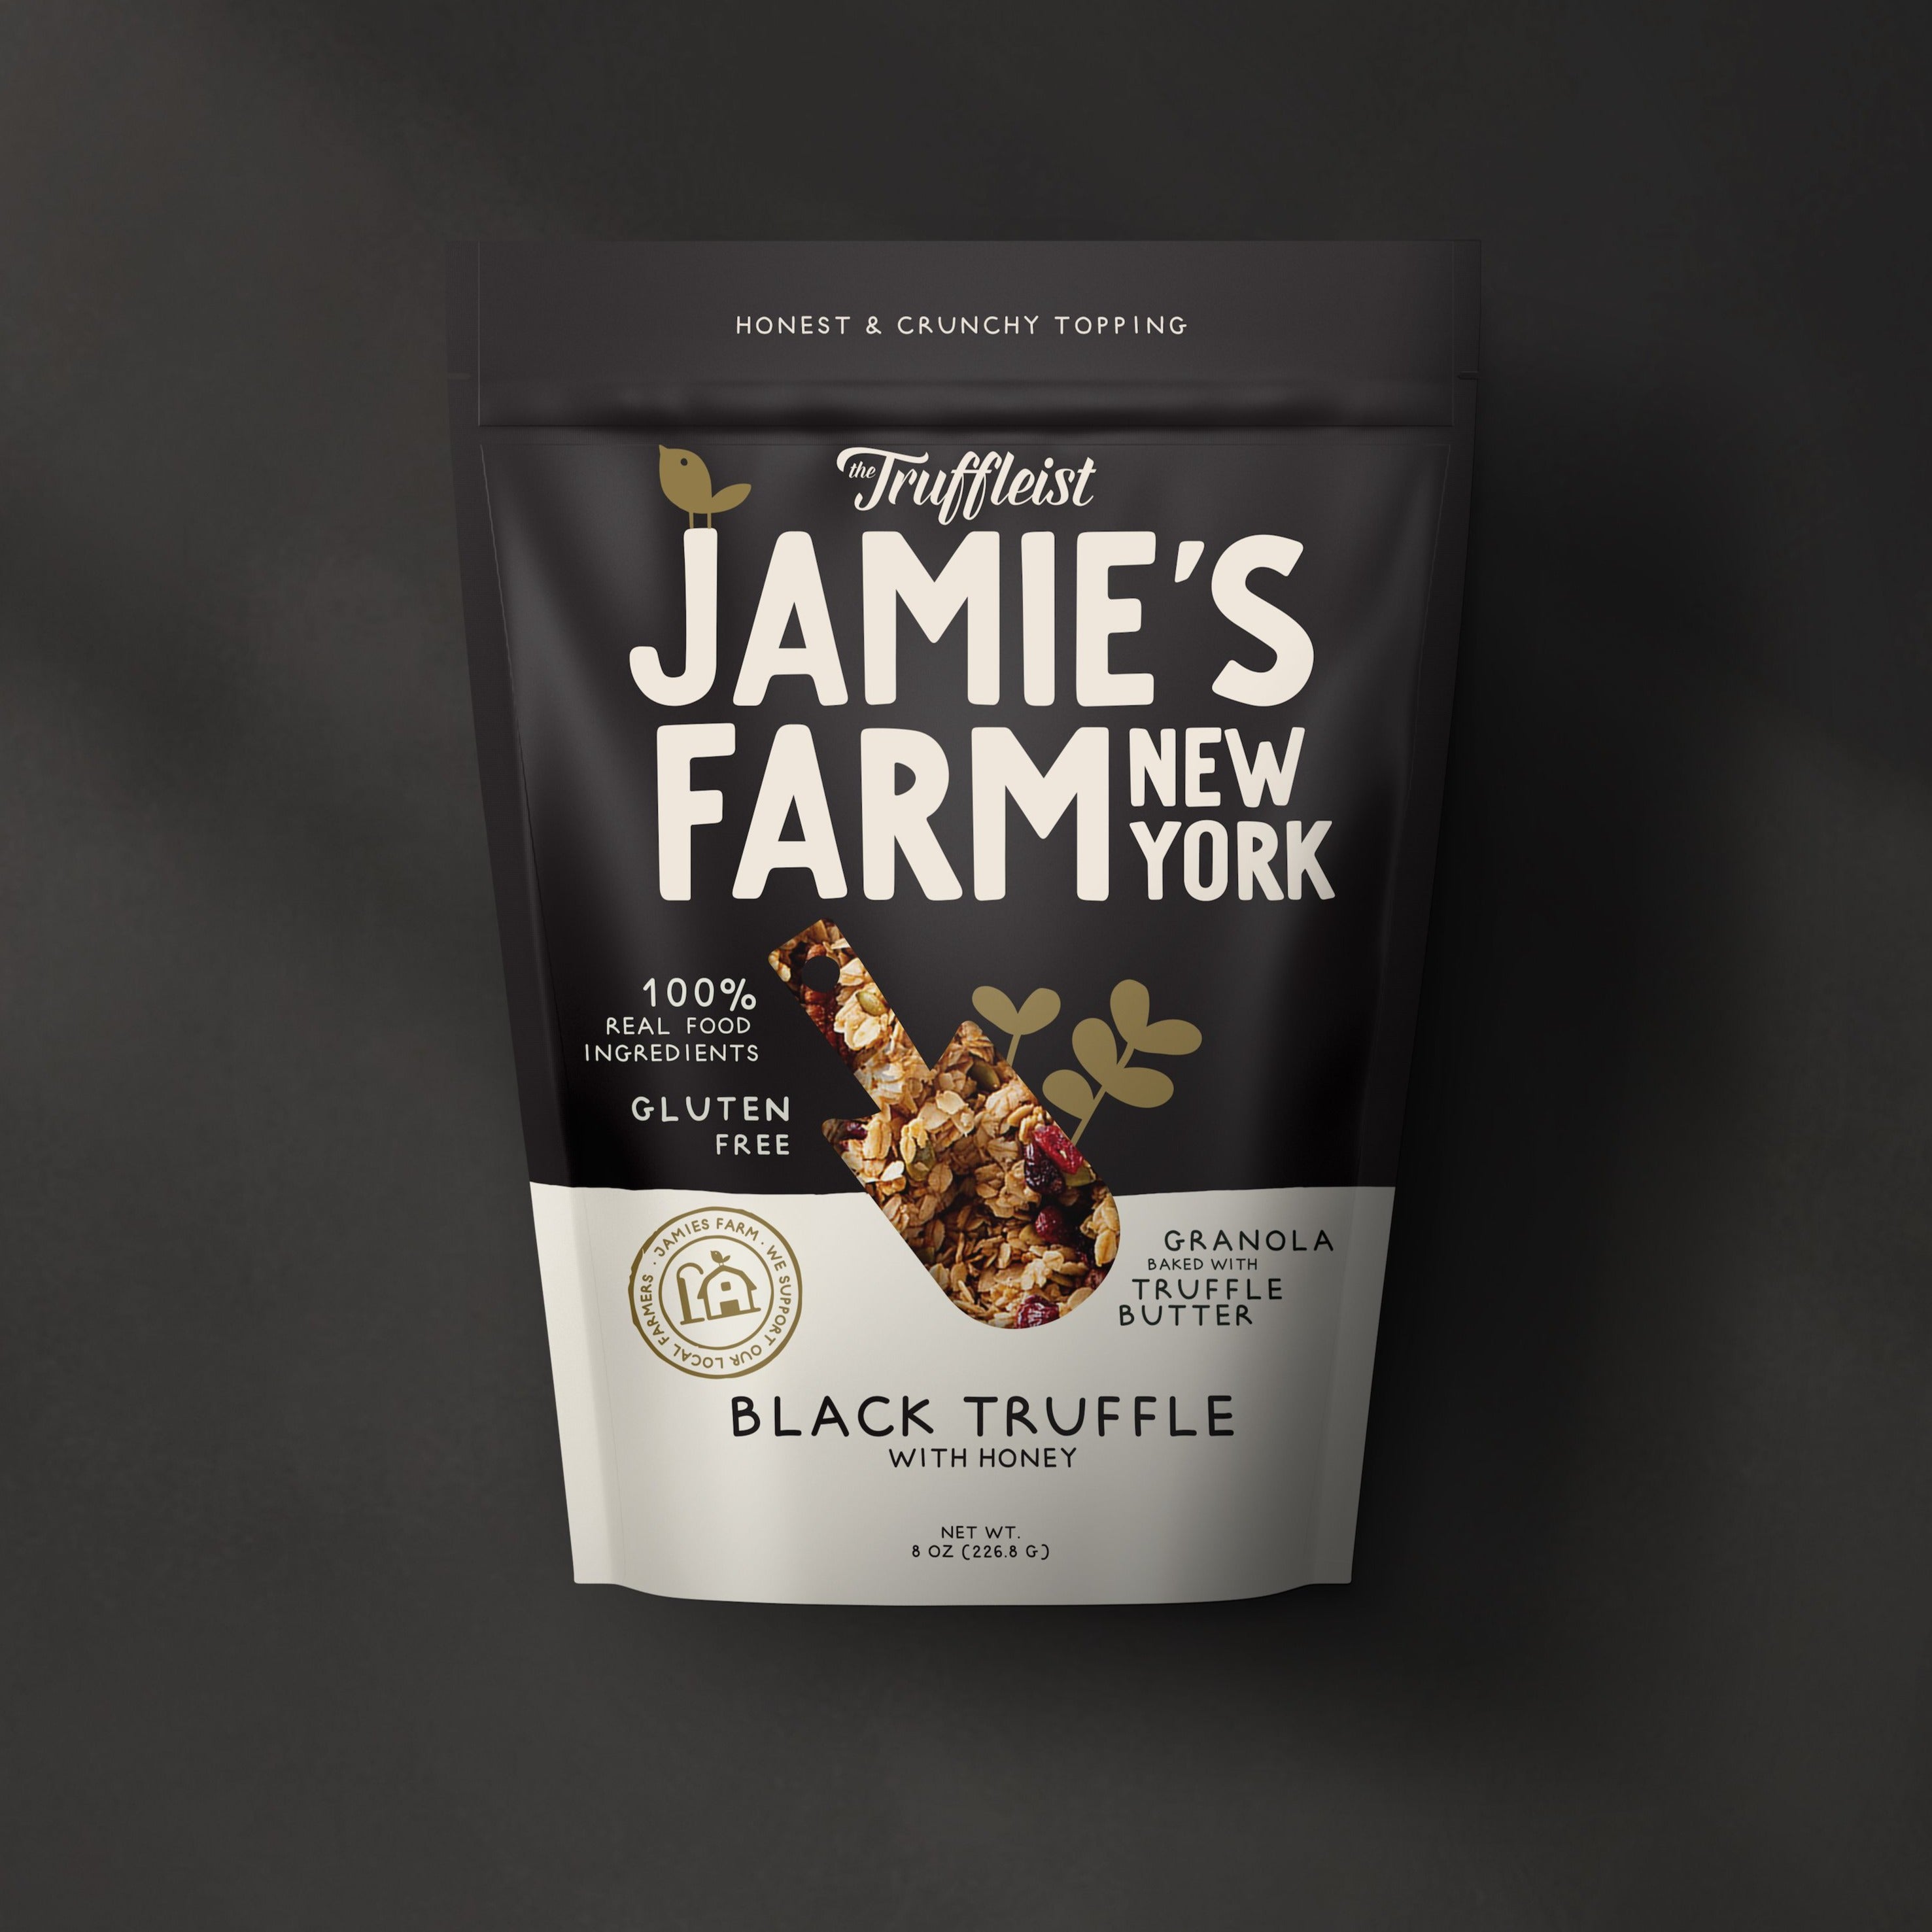 Jamie's Farm New York x The Truffleist Collaboration | The Best Granola Ever | For Chefs, 3 Michelin Star Eleven Madison Park Granola Recipe, Gluten-Free, Baked with Grass-fed Ghee, Sofi Award-Winning, Black Truffle with Honey